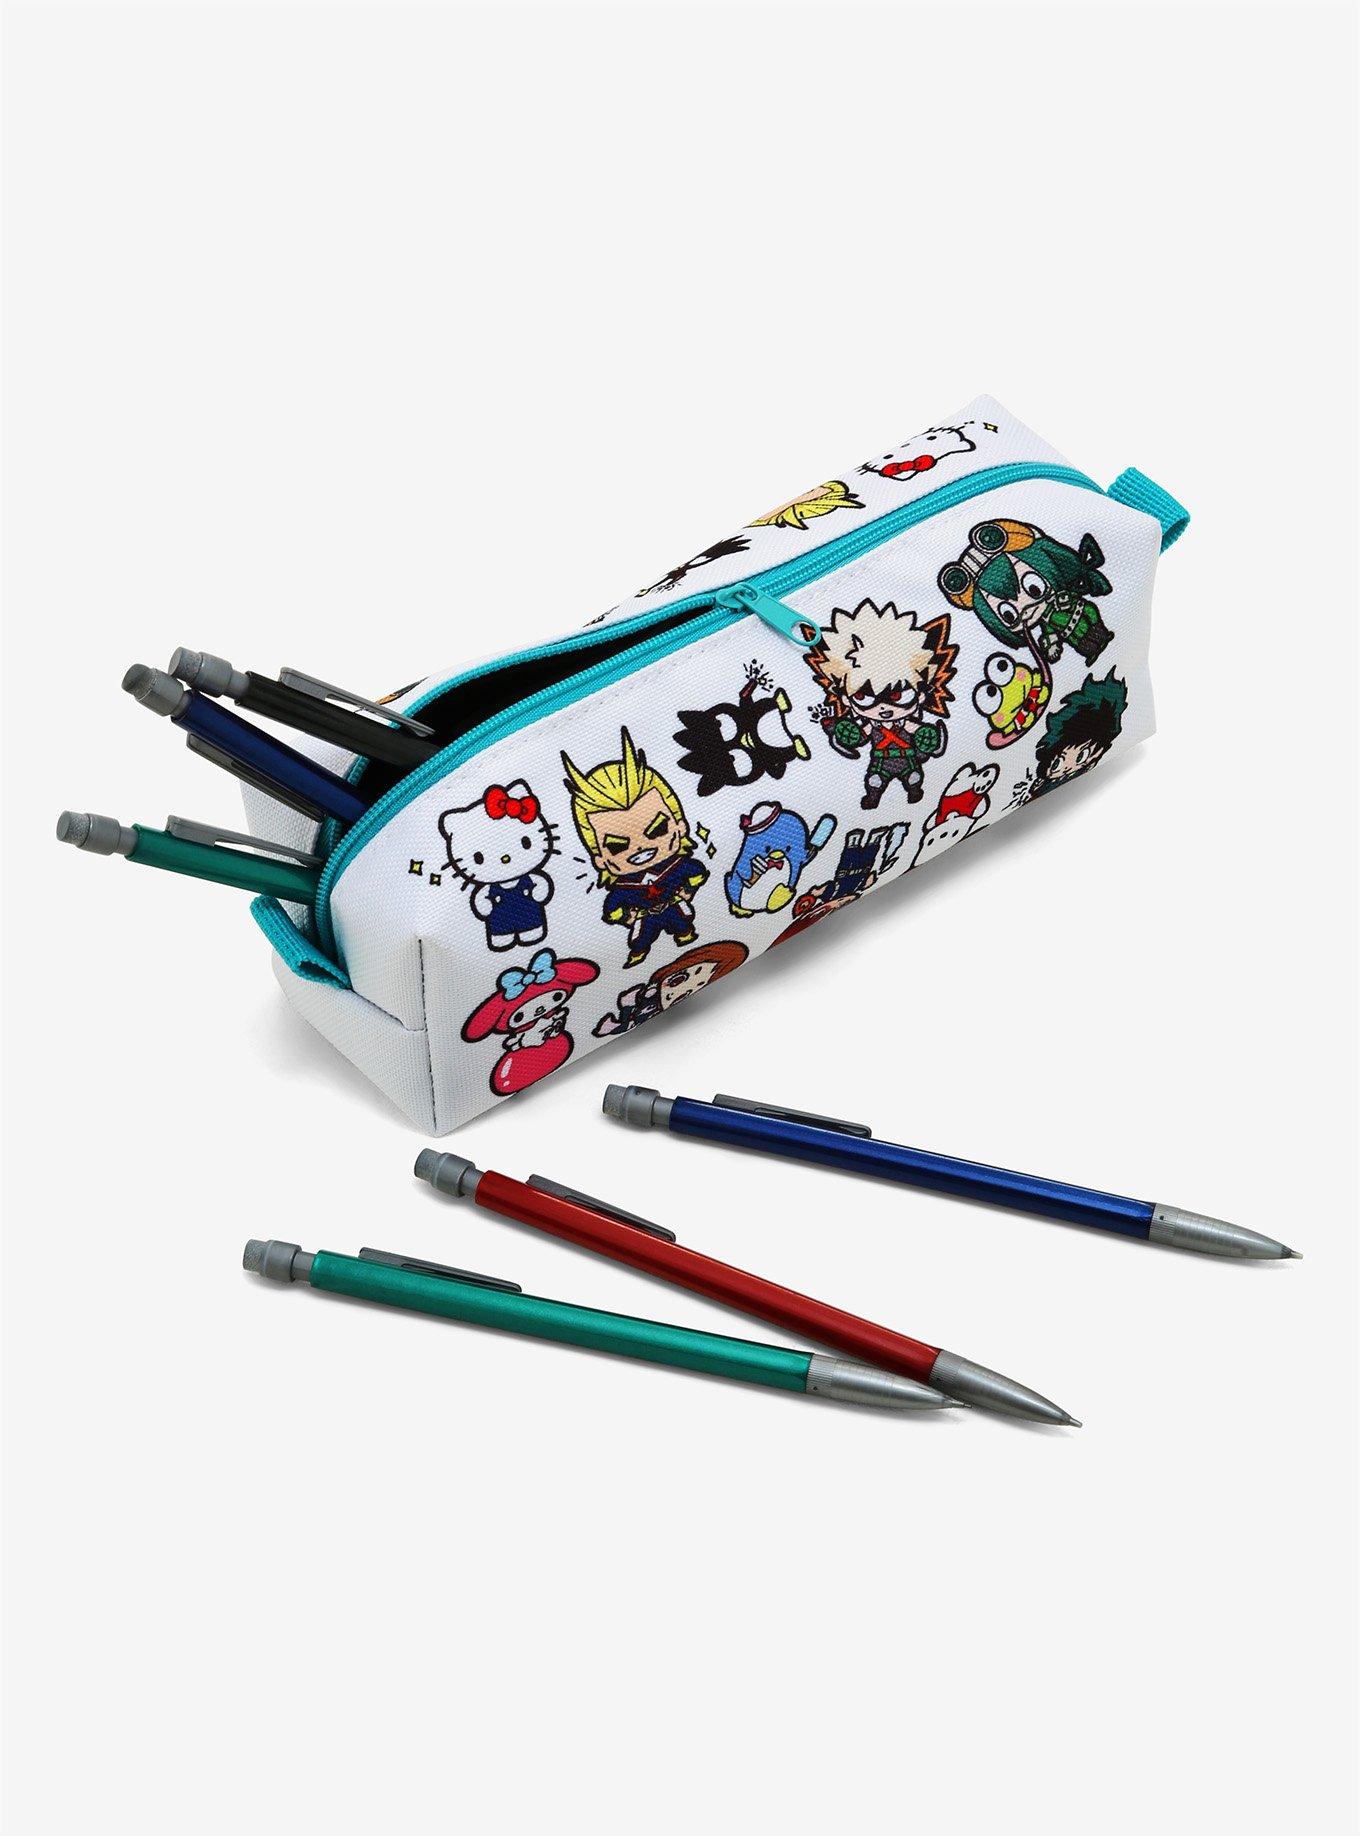 Hello Kitty, Office, Nwt Hello Kitty Pens